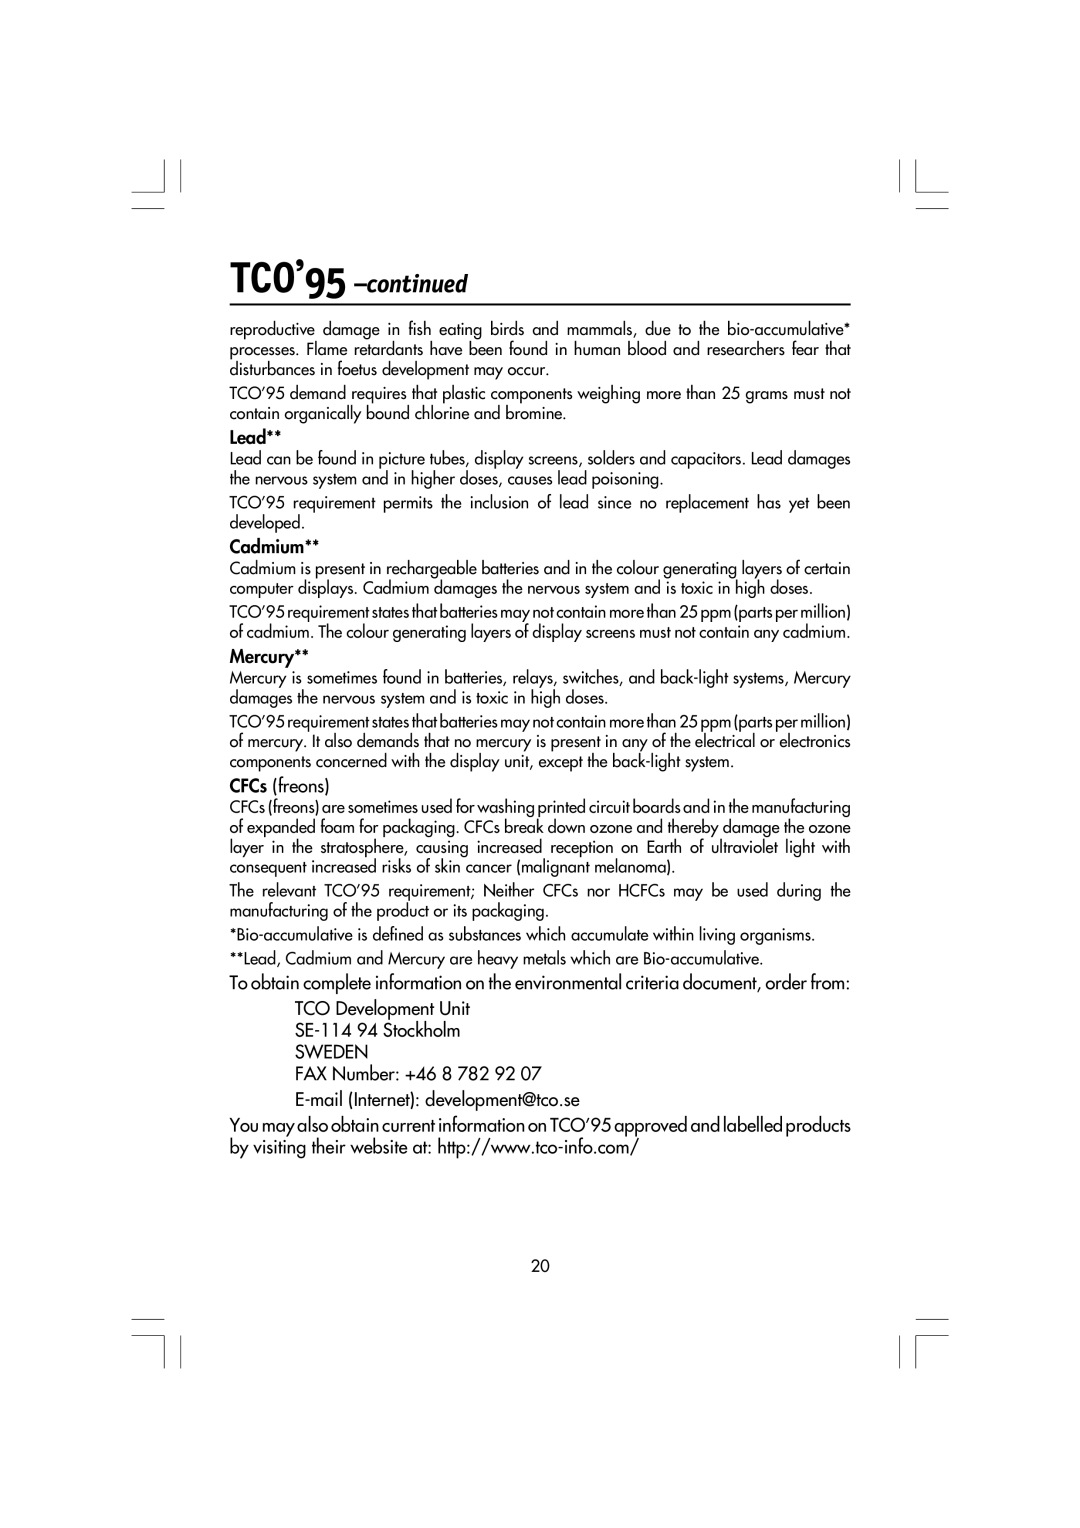 Mitsubishi Electronics LCD1720M manual TCO’95 -continued, Lead, Cadmium, Mercury, CFCs freons 